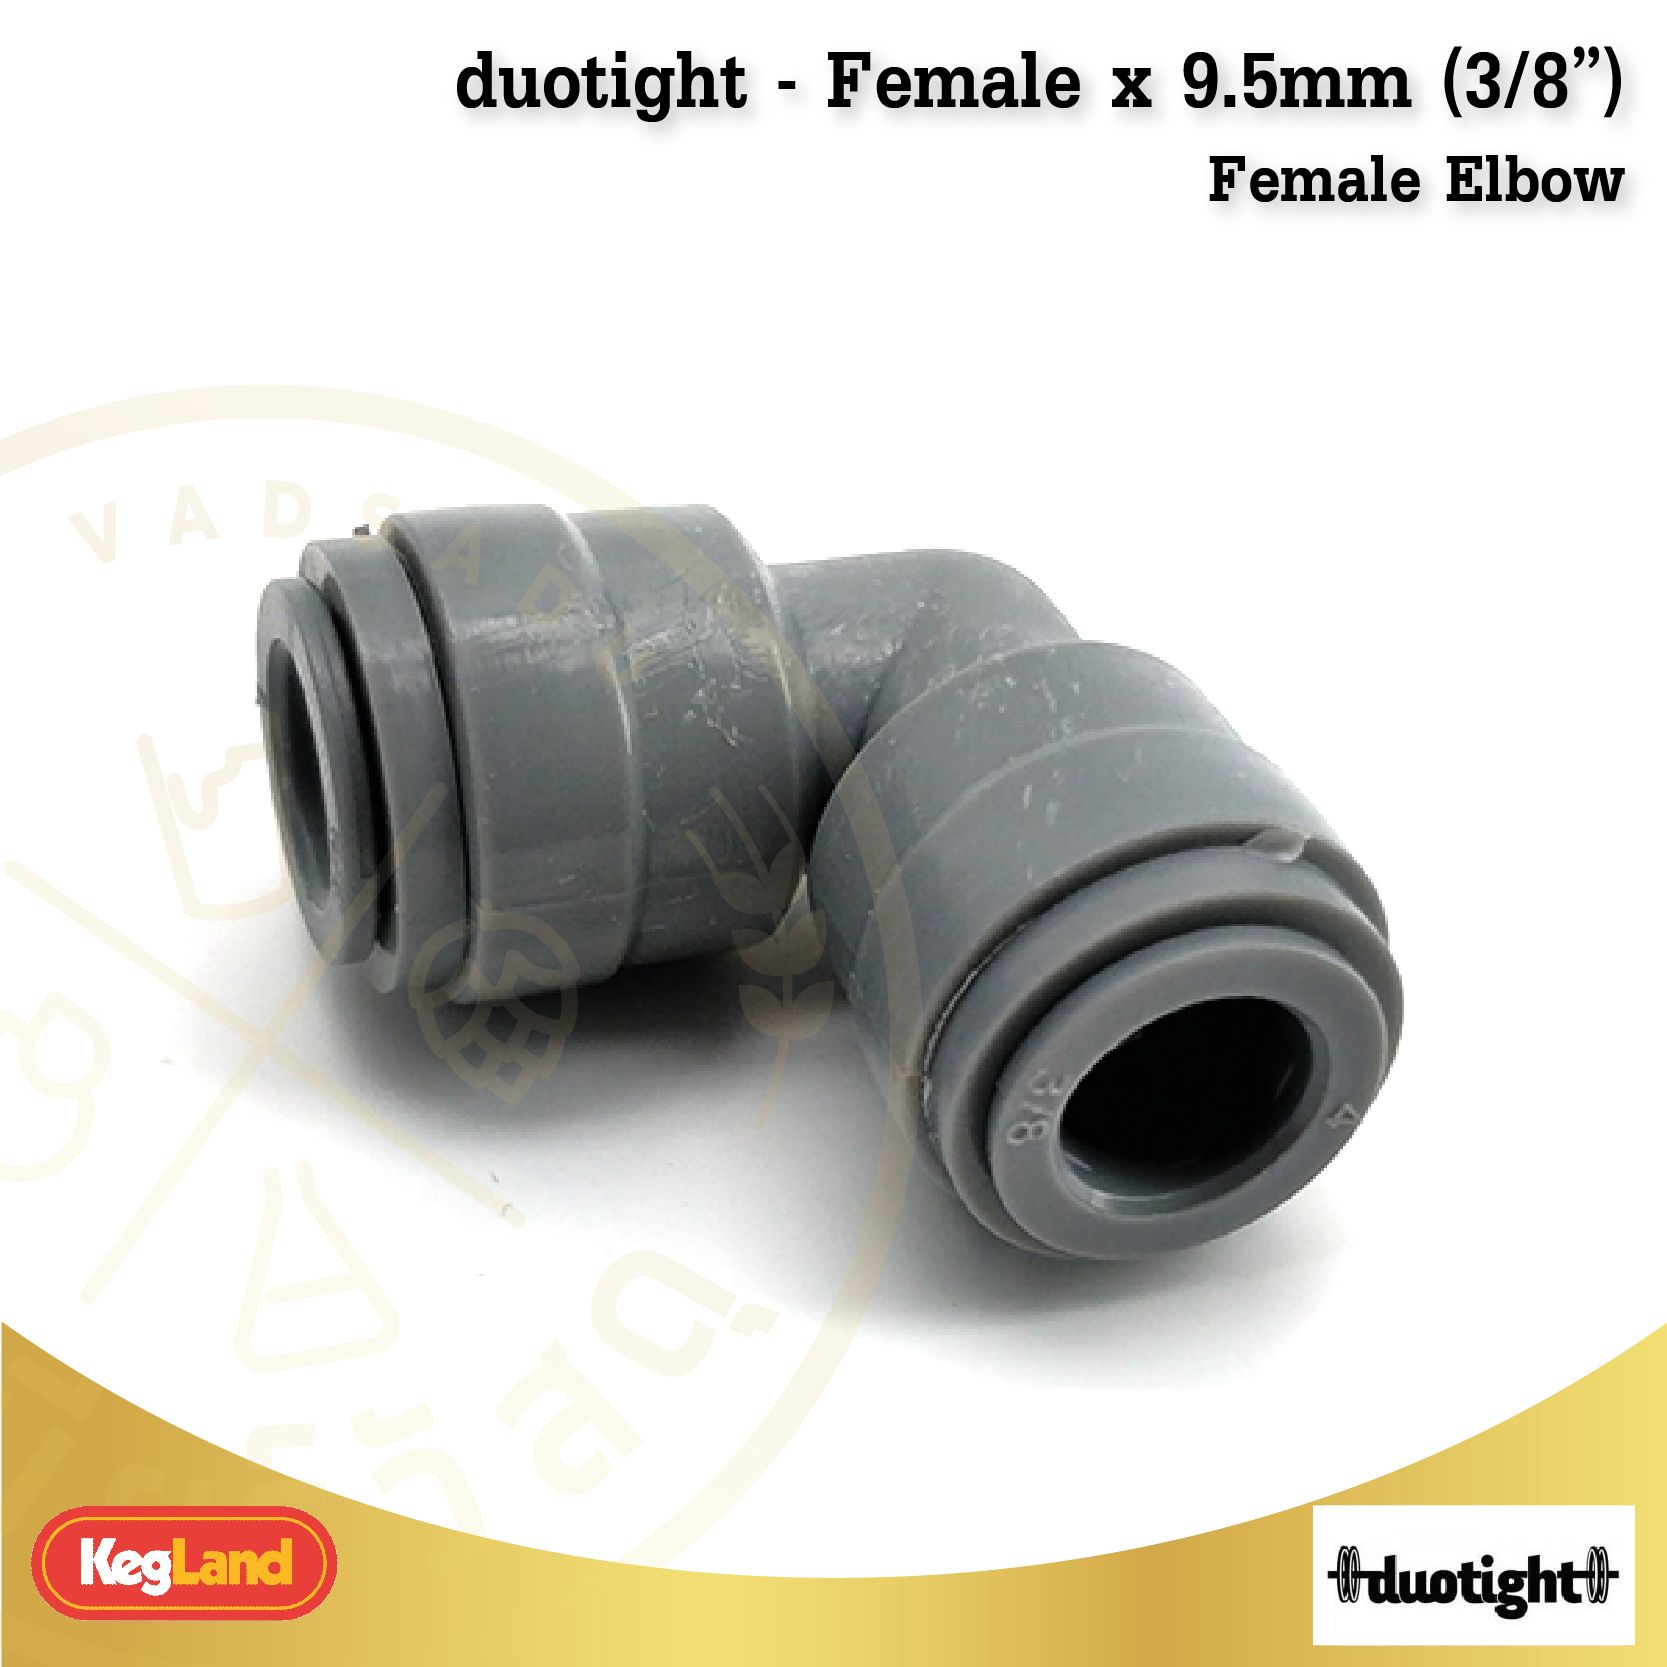 duotight - 9.5mm (3/8”) Female x 9.5mm (3/8”) Female Elbow